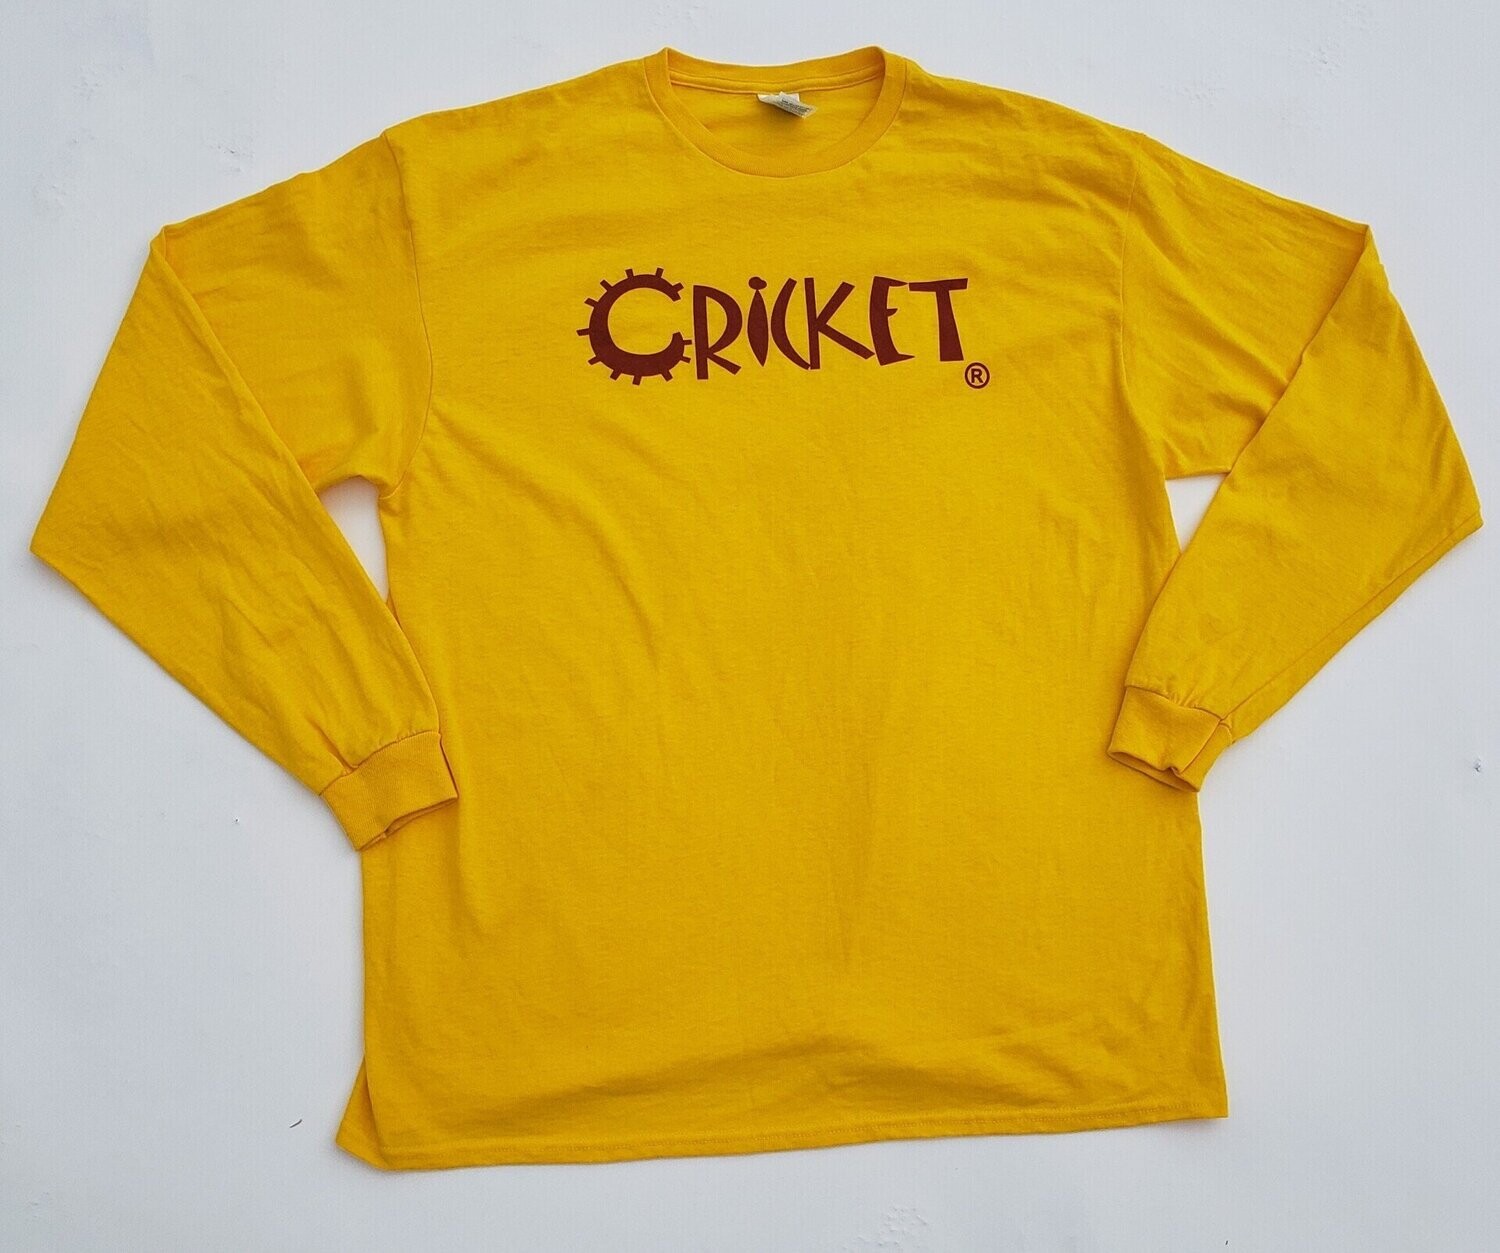 Cricket Shirts (Short or Long Sleeve)
100% Preshrunk Cotton